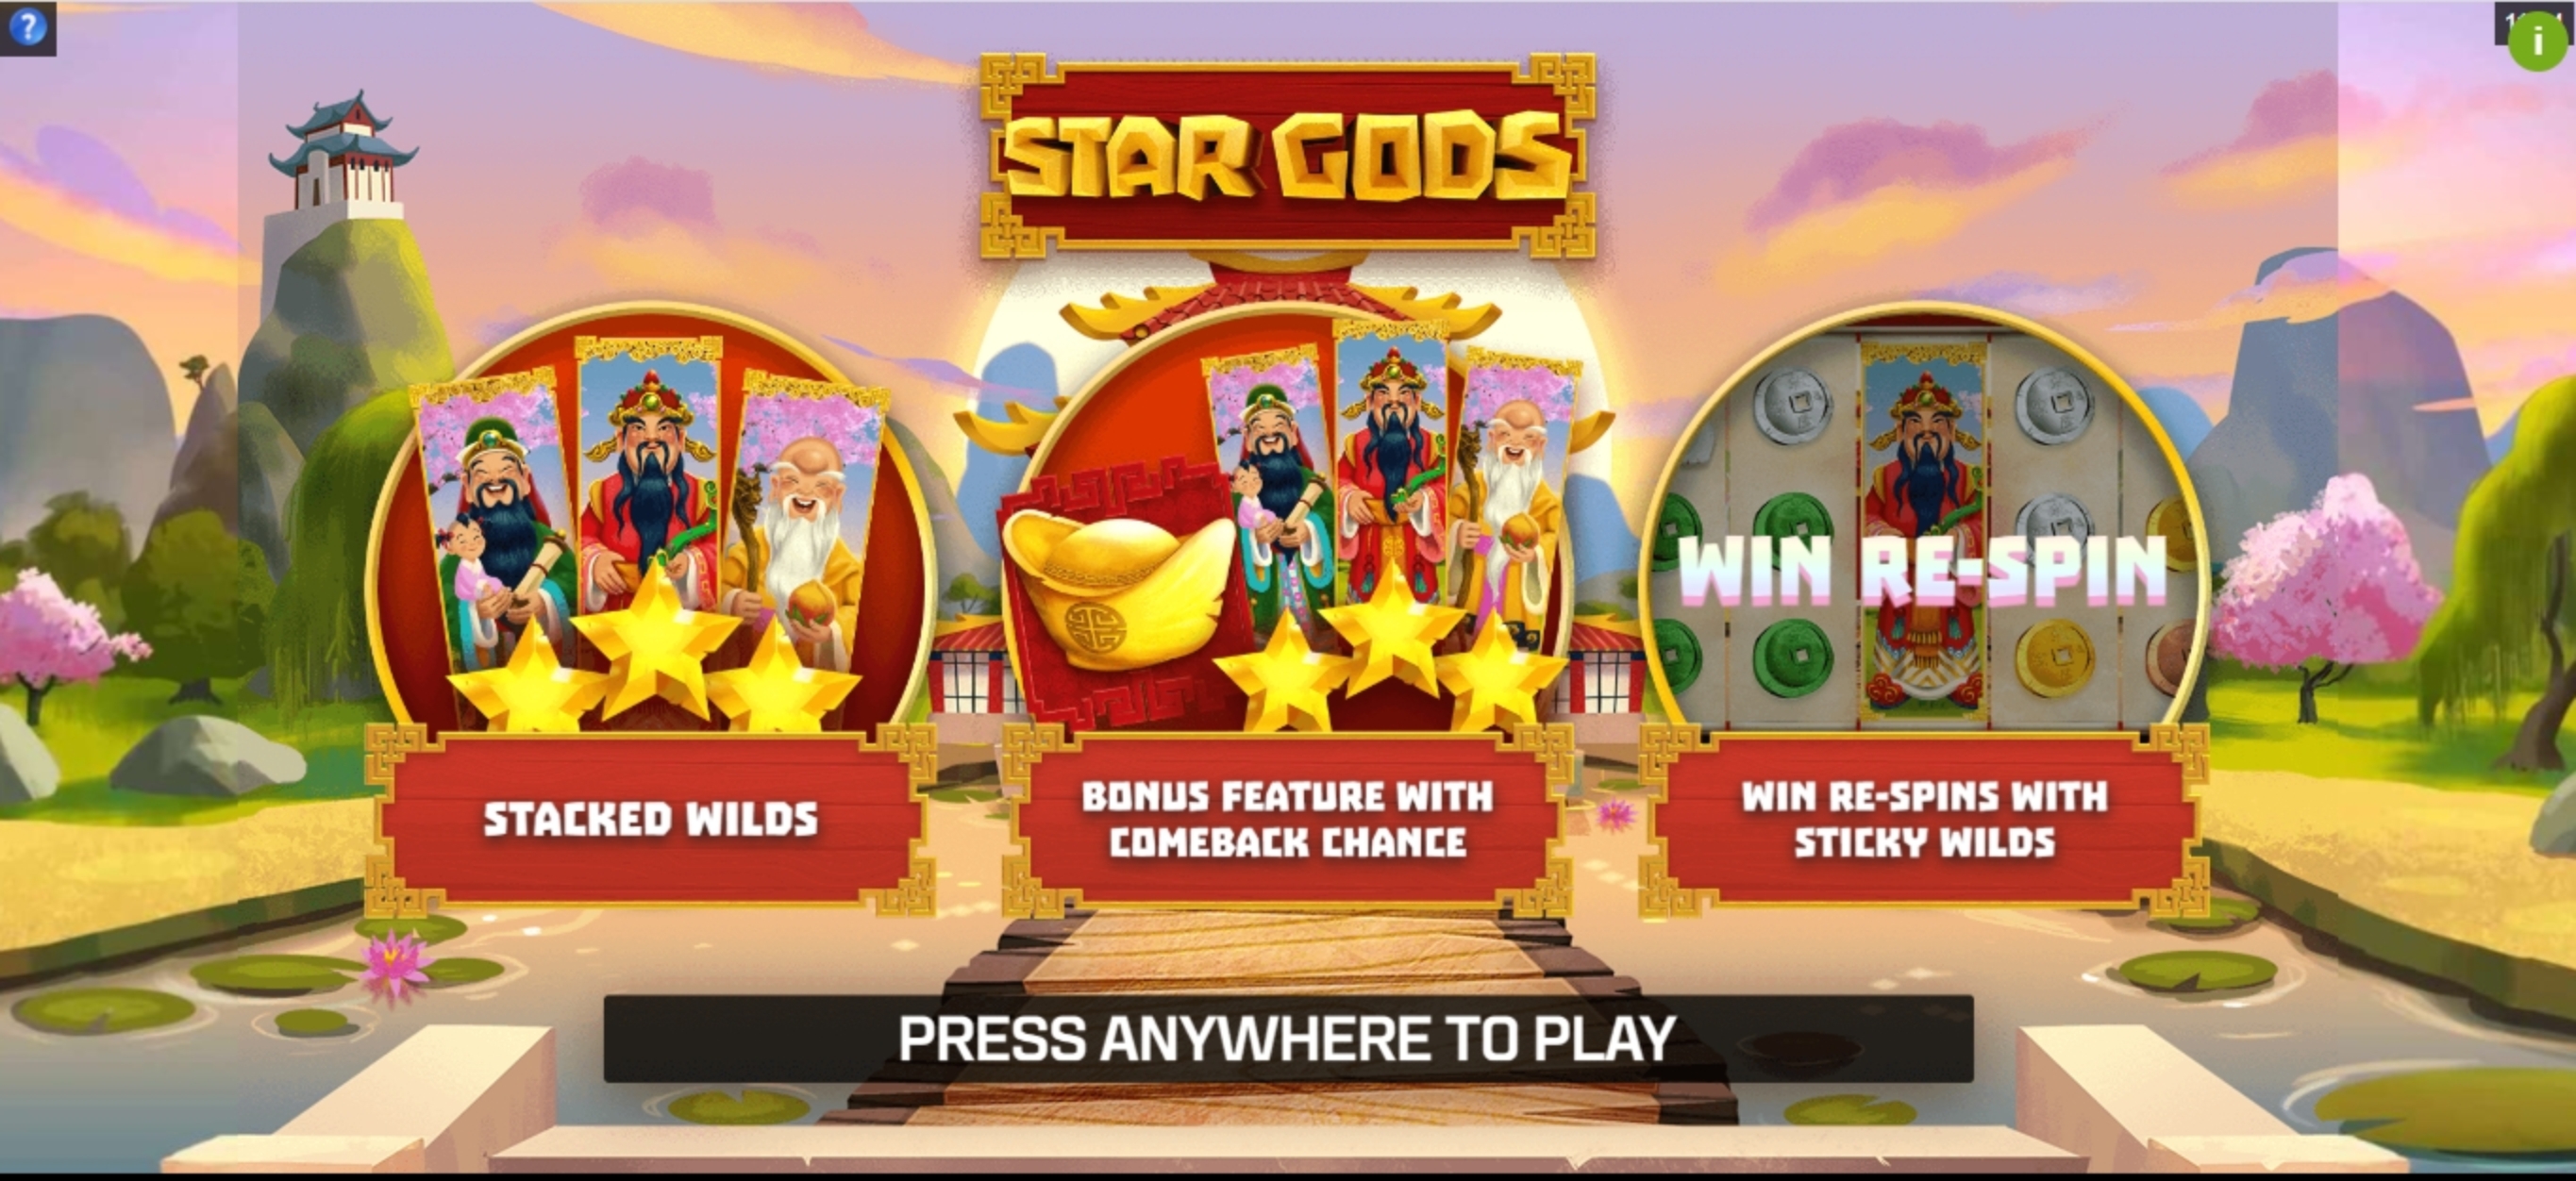 Play Star Gods Free Casino Slot Game by Golden Rock Studios